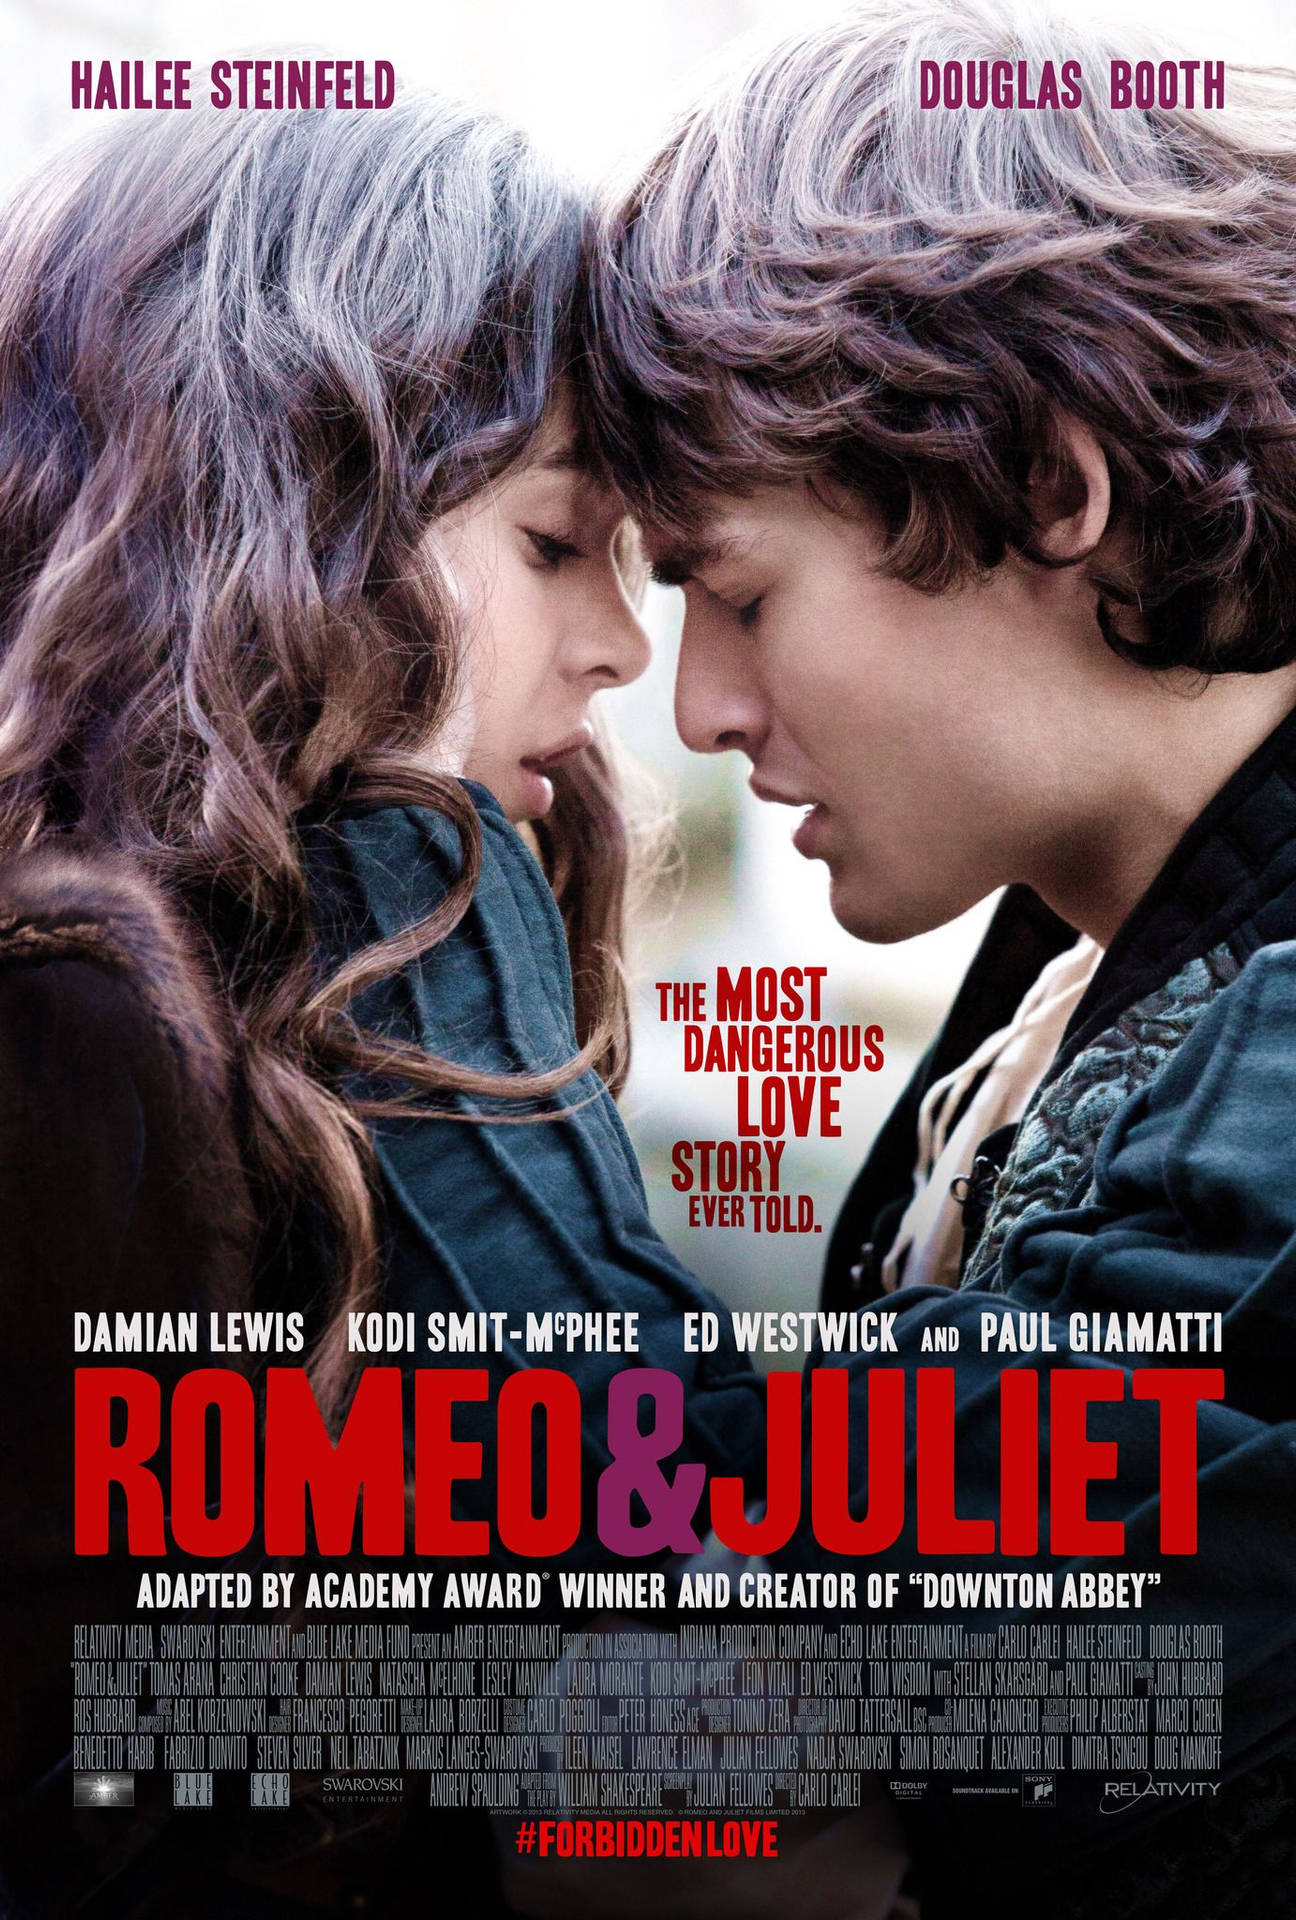 Romeound Julia Film Wallpaper